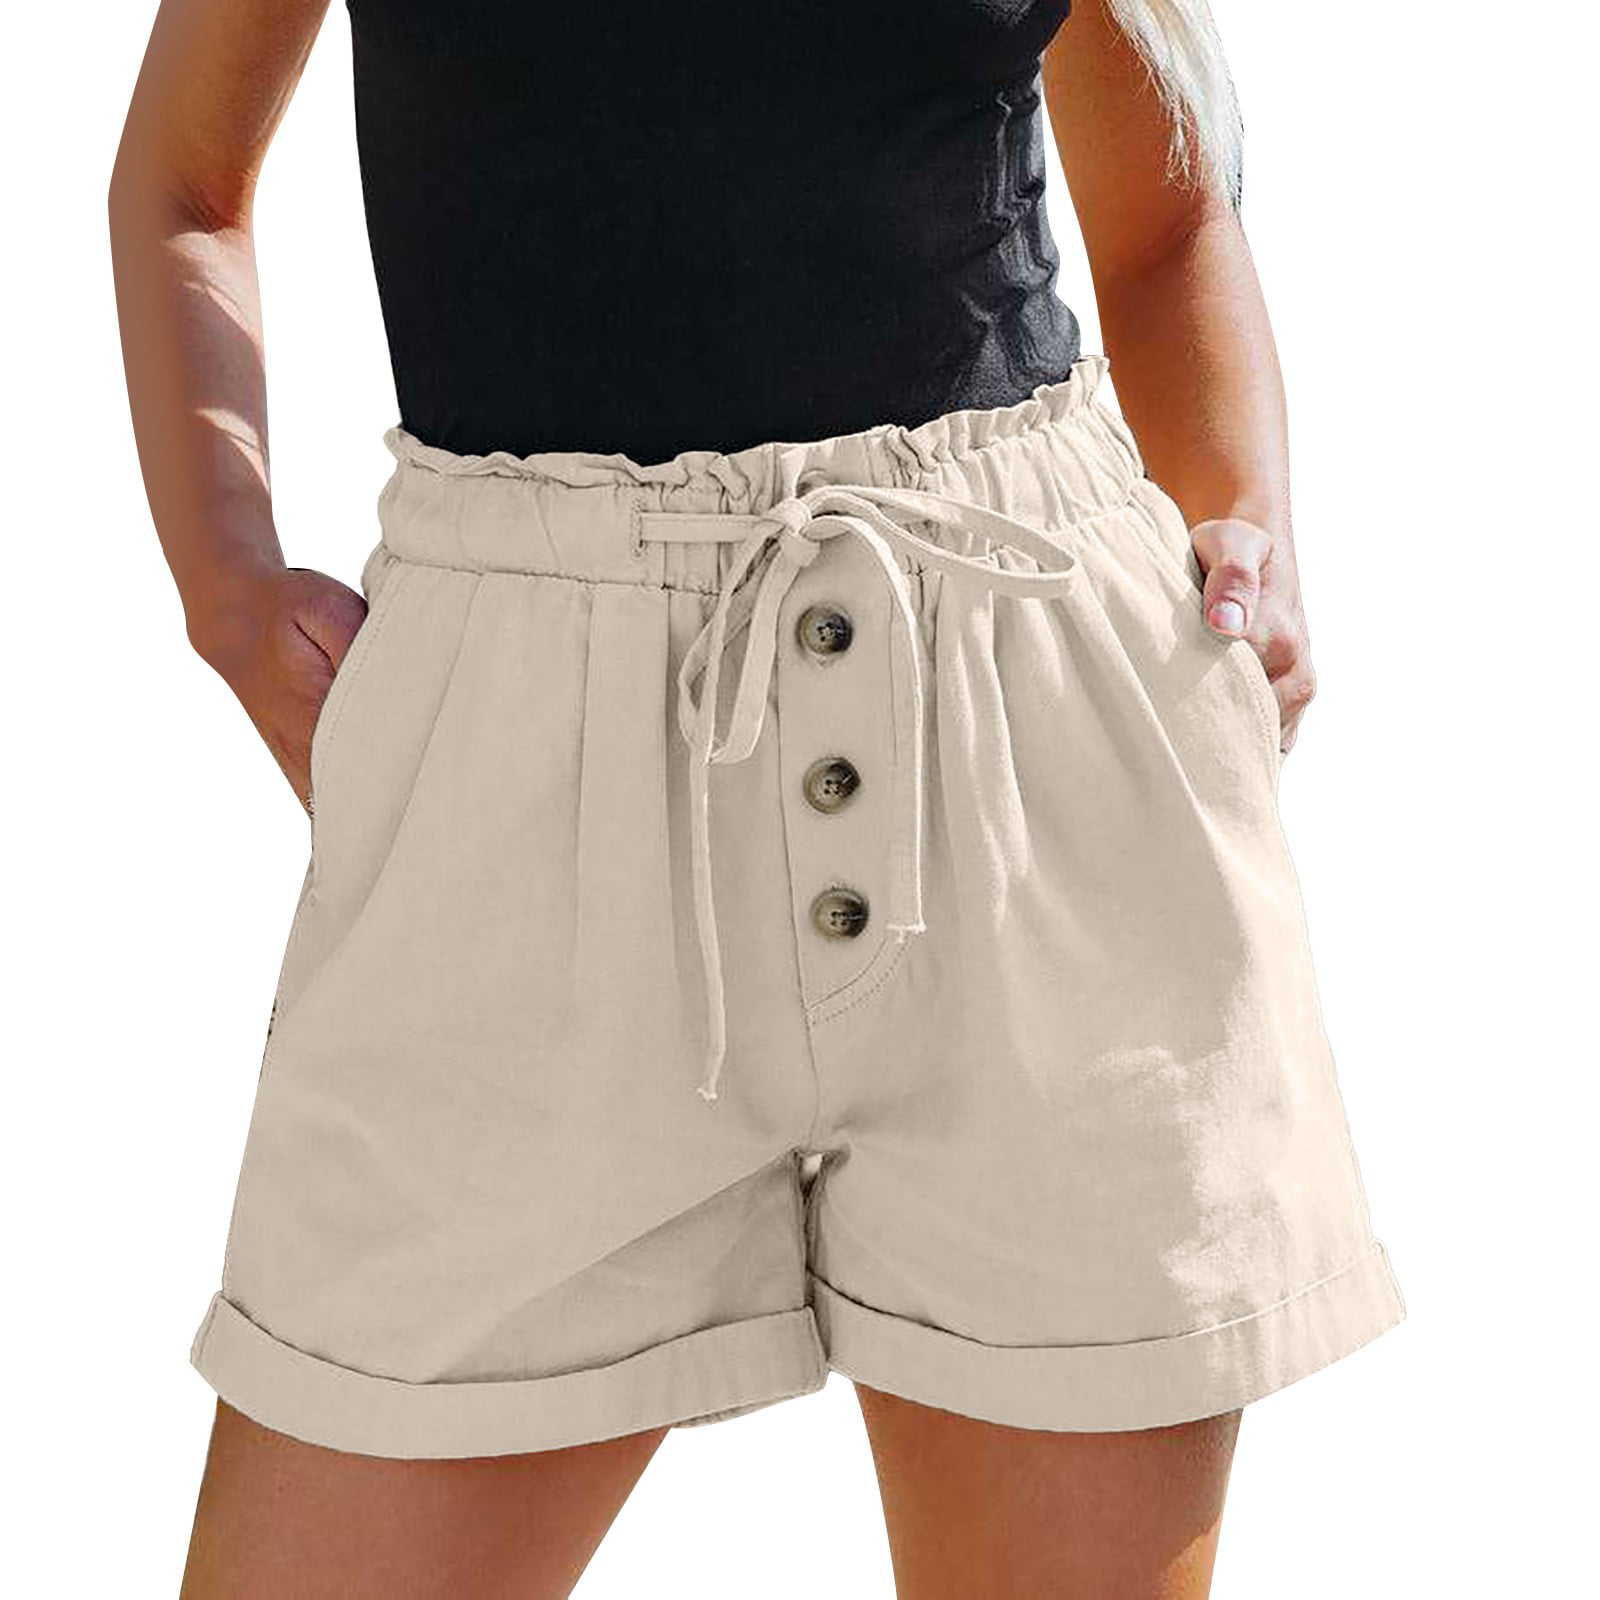 JDEFEG Spandex Shorts with Pockets Women Fashion Wide Leg Pants